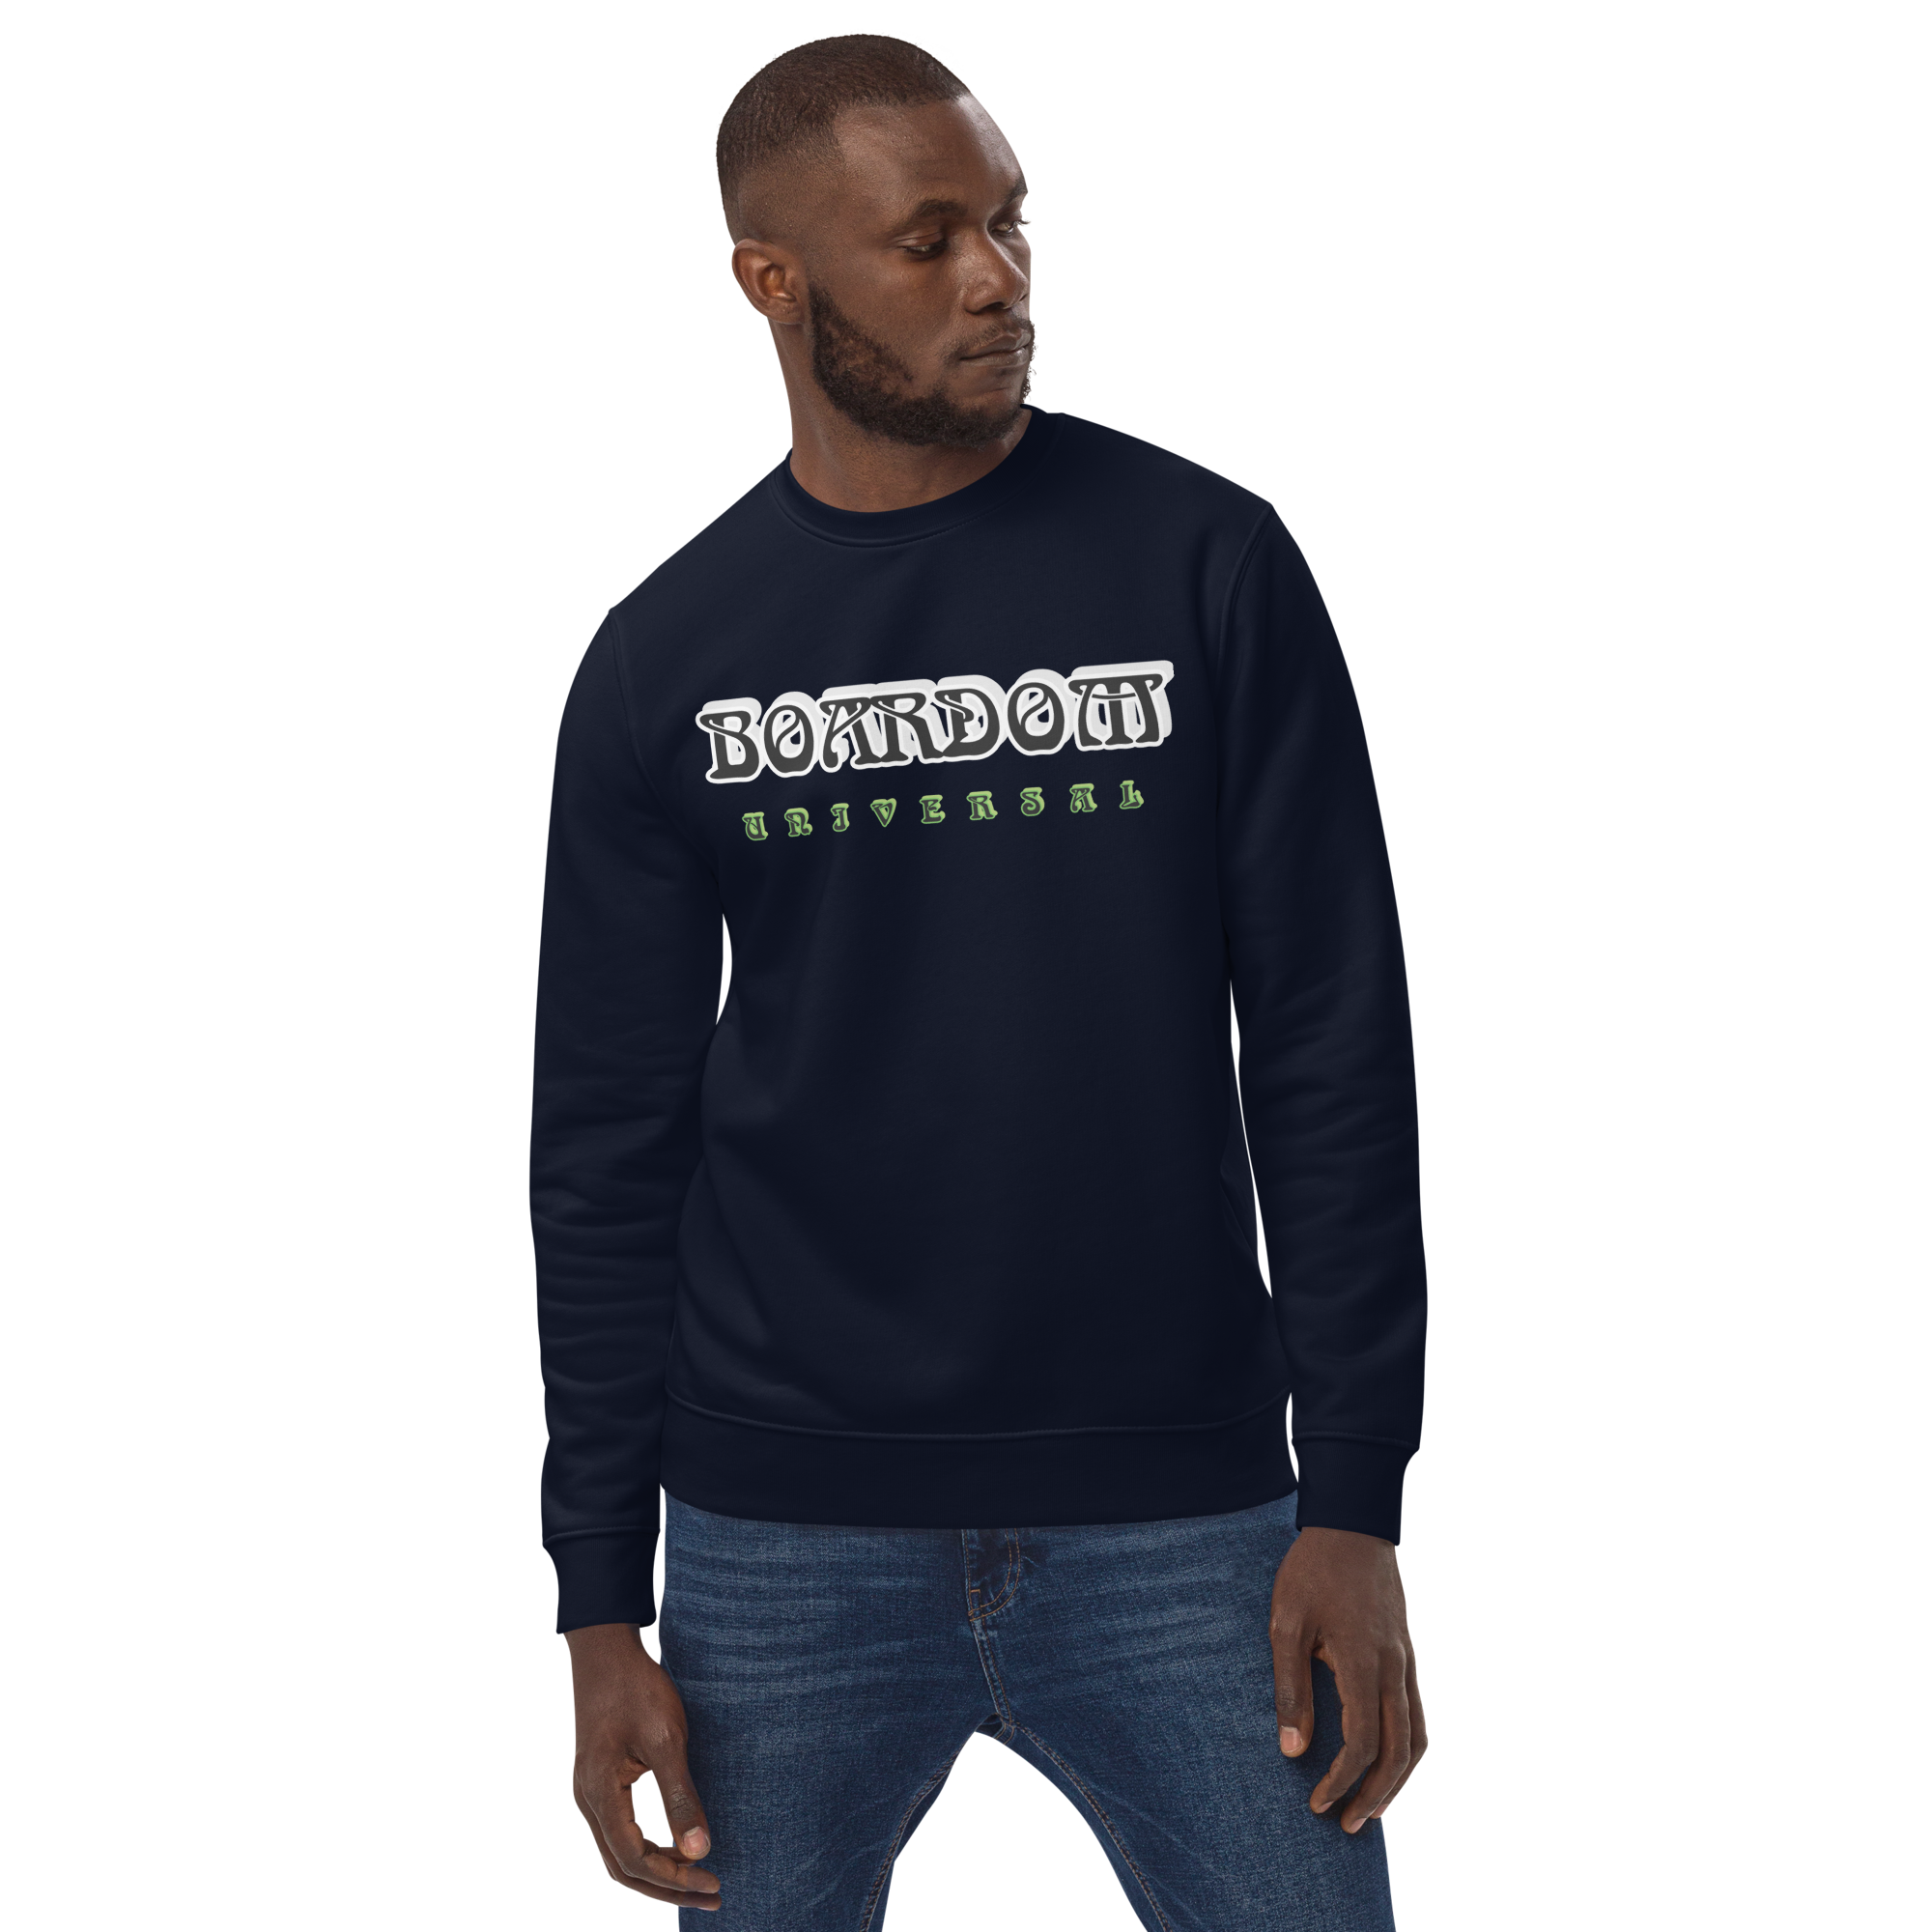 Boardom Universal eco sweatshirt